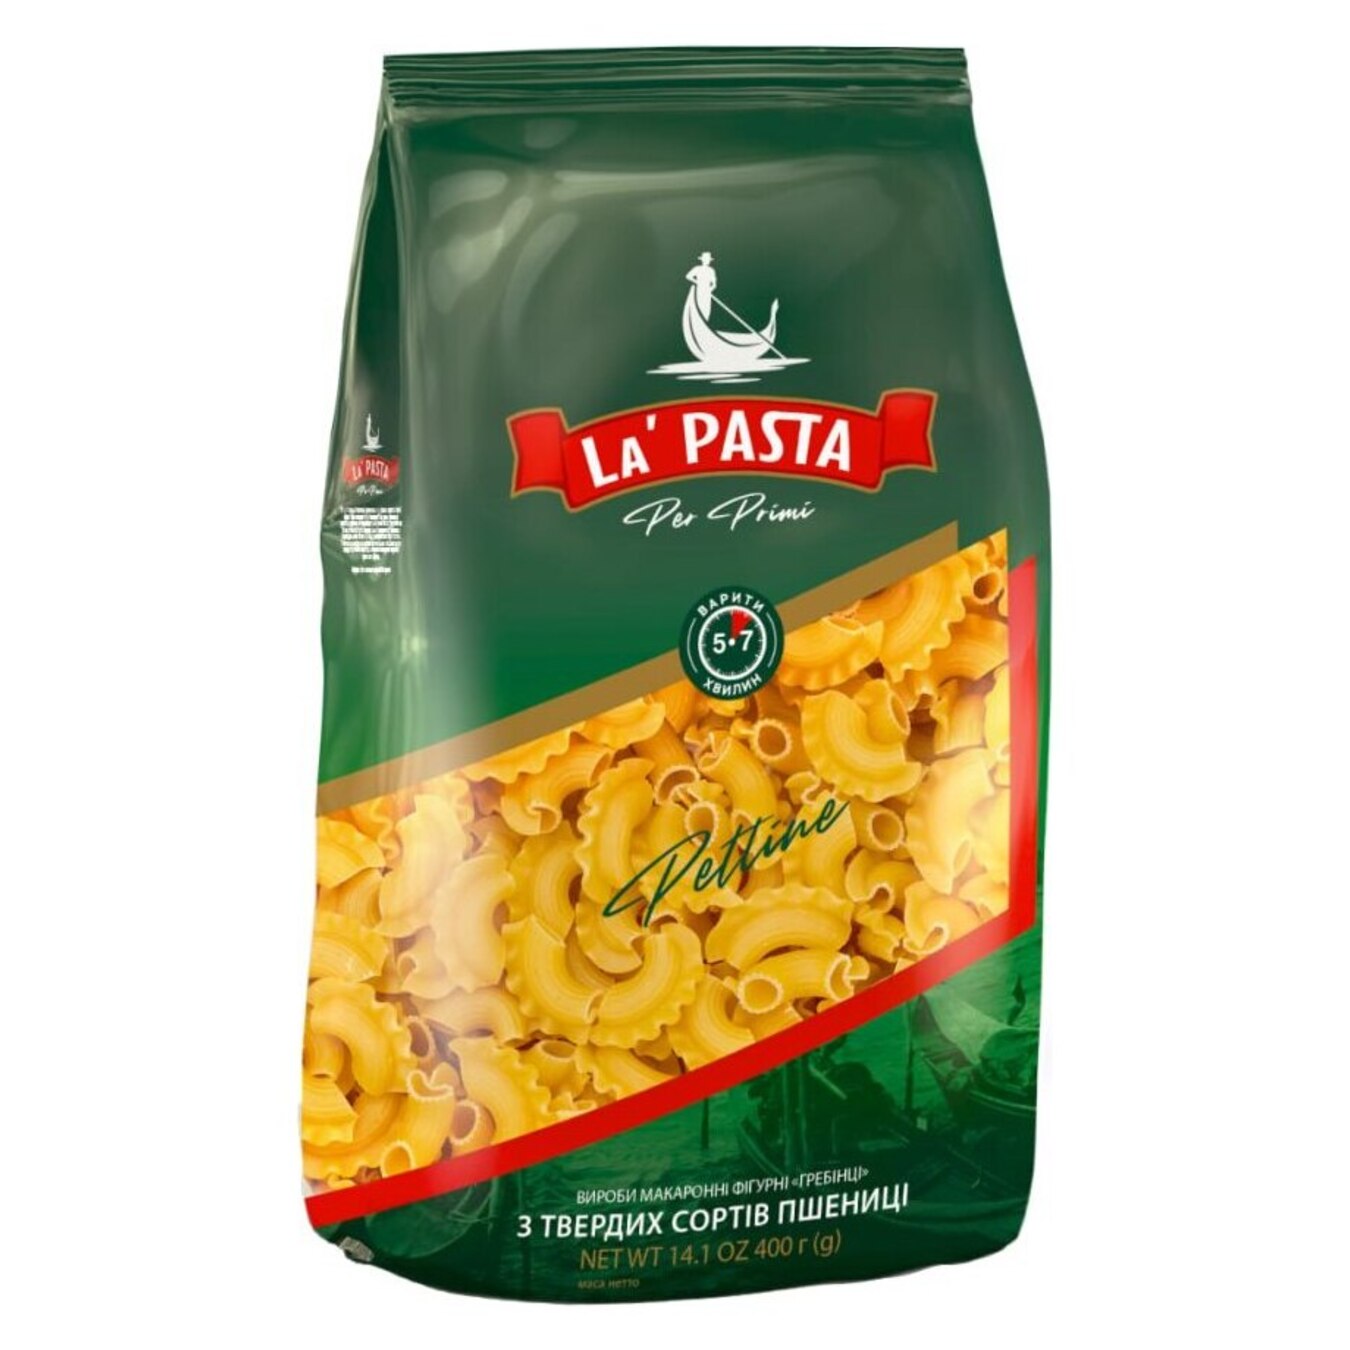 Pasta La Pasta scallops 400g